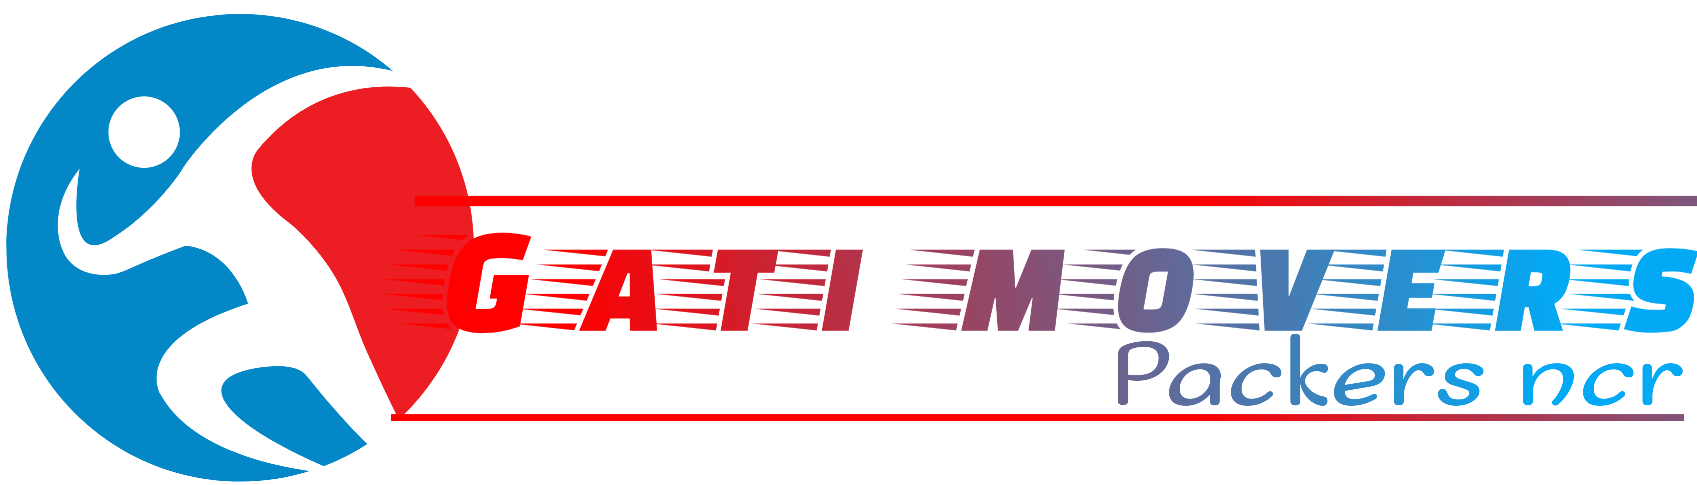 Gati Goods Transport  Logo